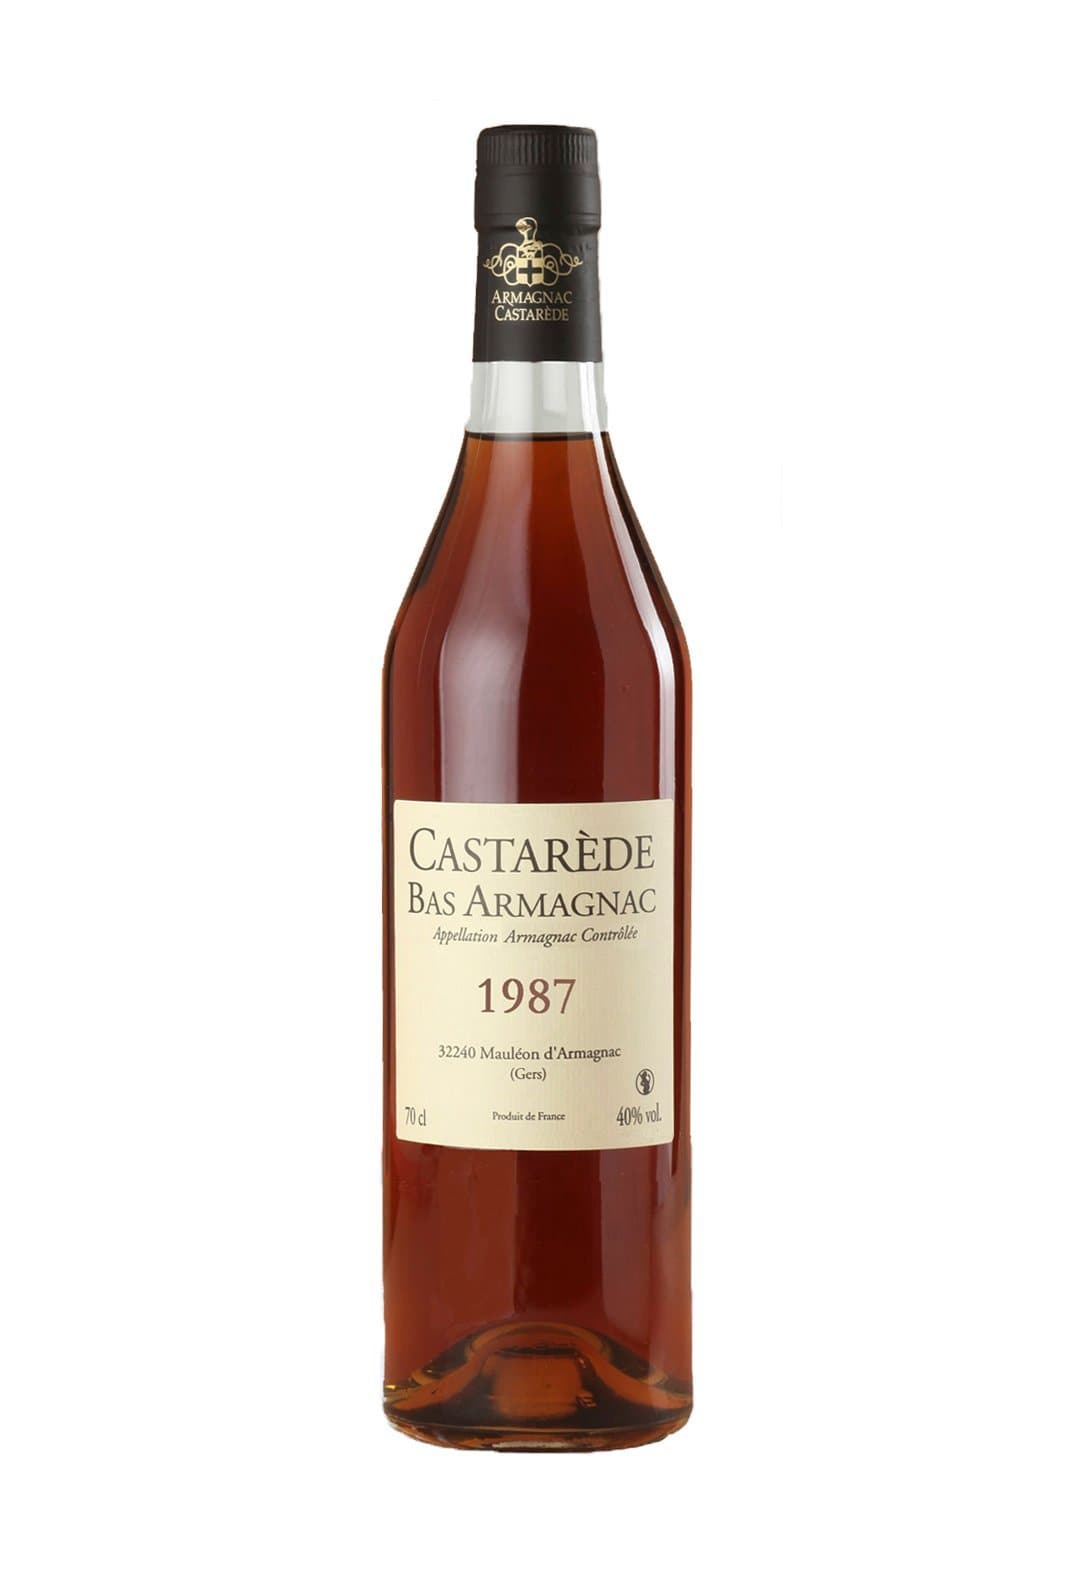 Castarede 1987 Bas Armagnac 40% 700ml | Brandy | Shop online at Spirits of France